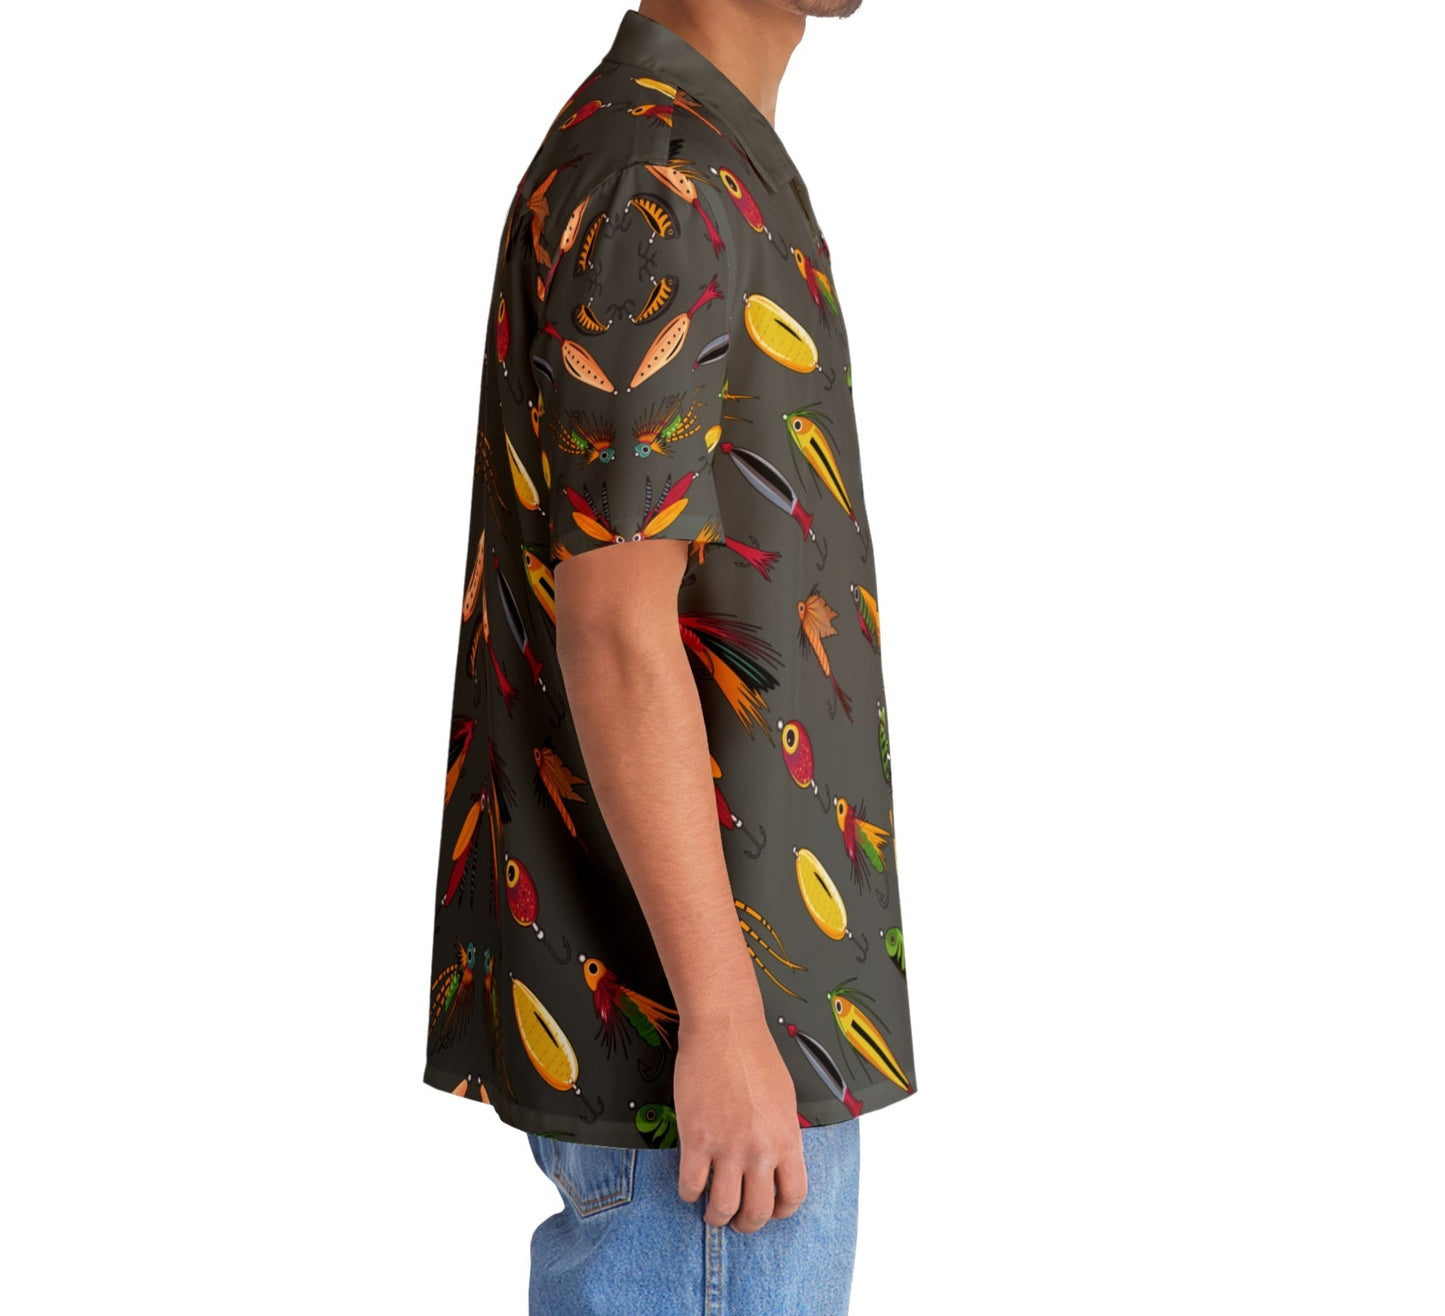 The Lures - Hawaiian Style Shirts